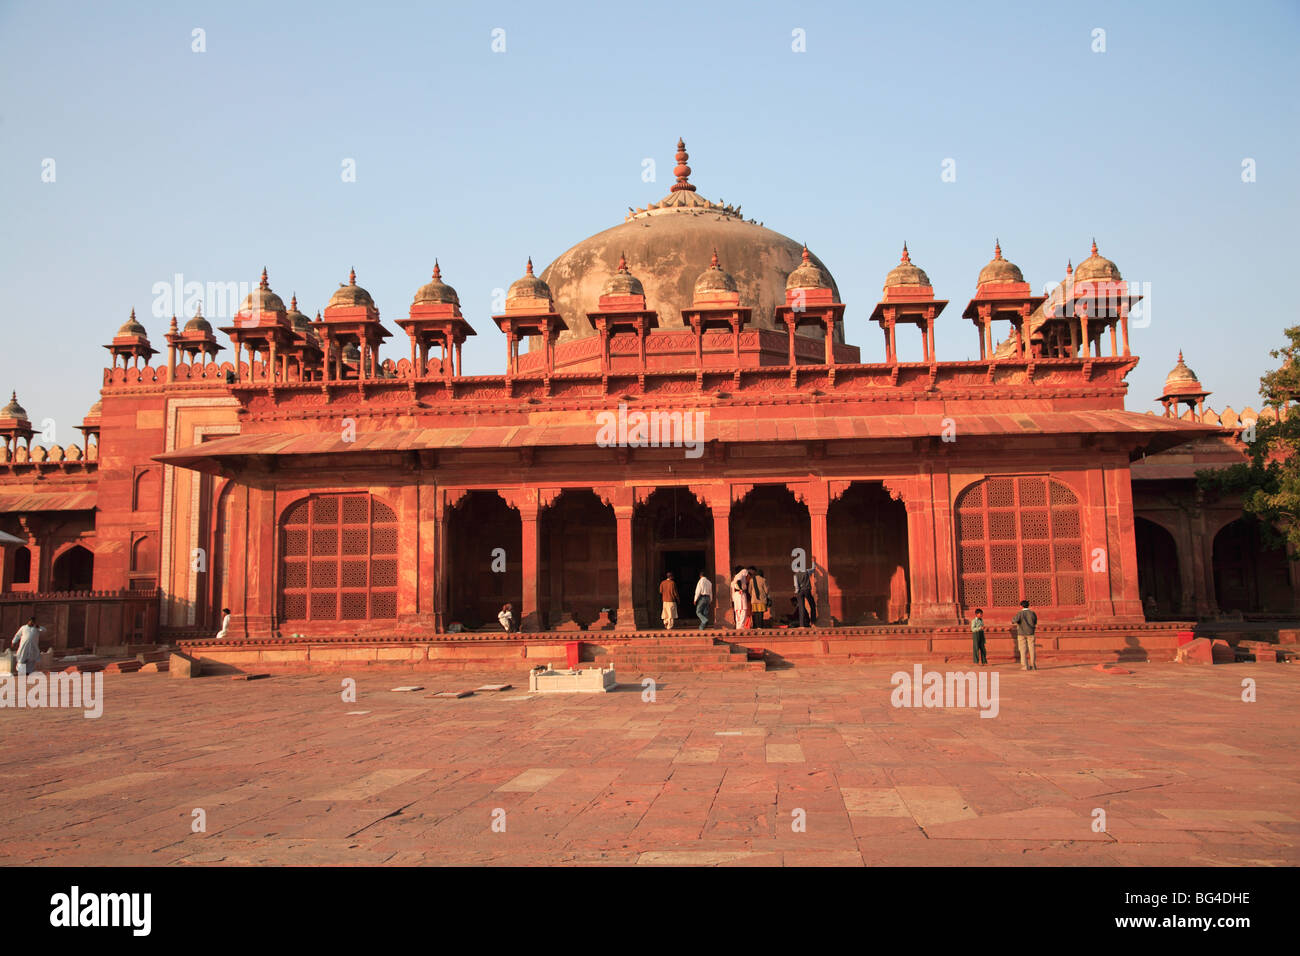 Tomb of Islam Khan, inner courtyard of Jama Masjid, Fatehpur Sikri, UNESCO World Heritage Site, Uttar Pradesh, India, Asia Stock Photo